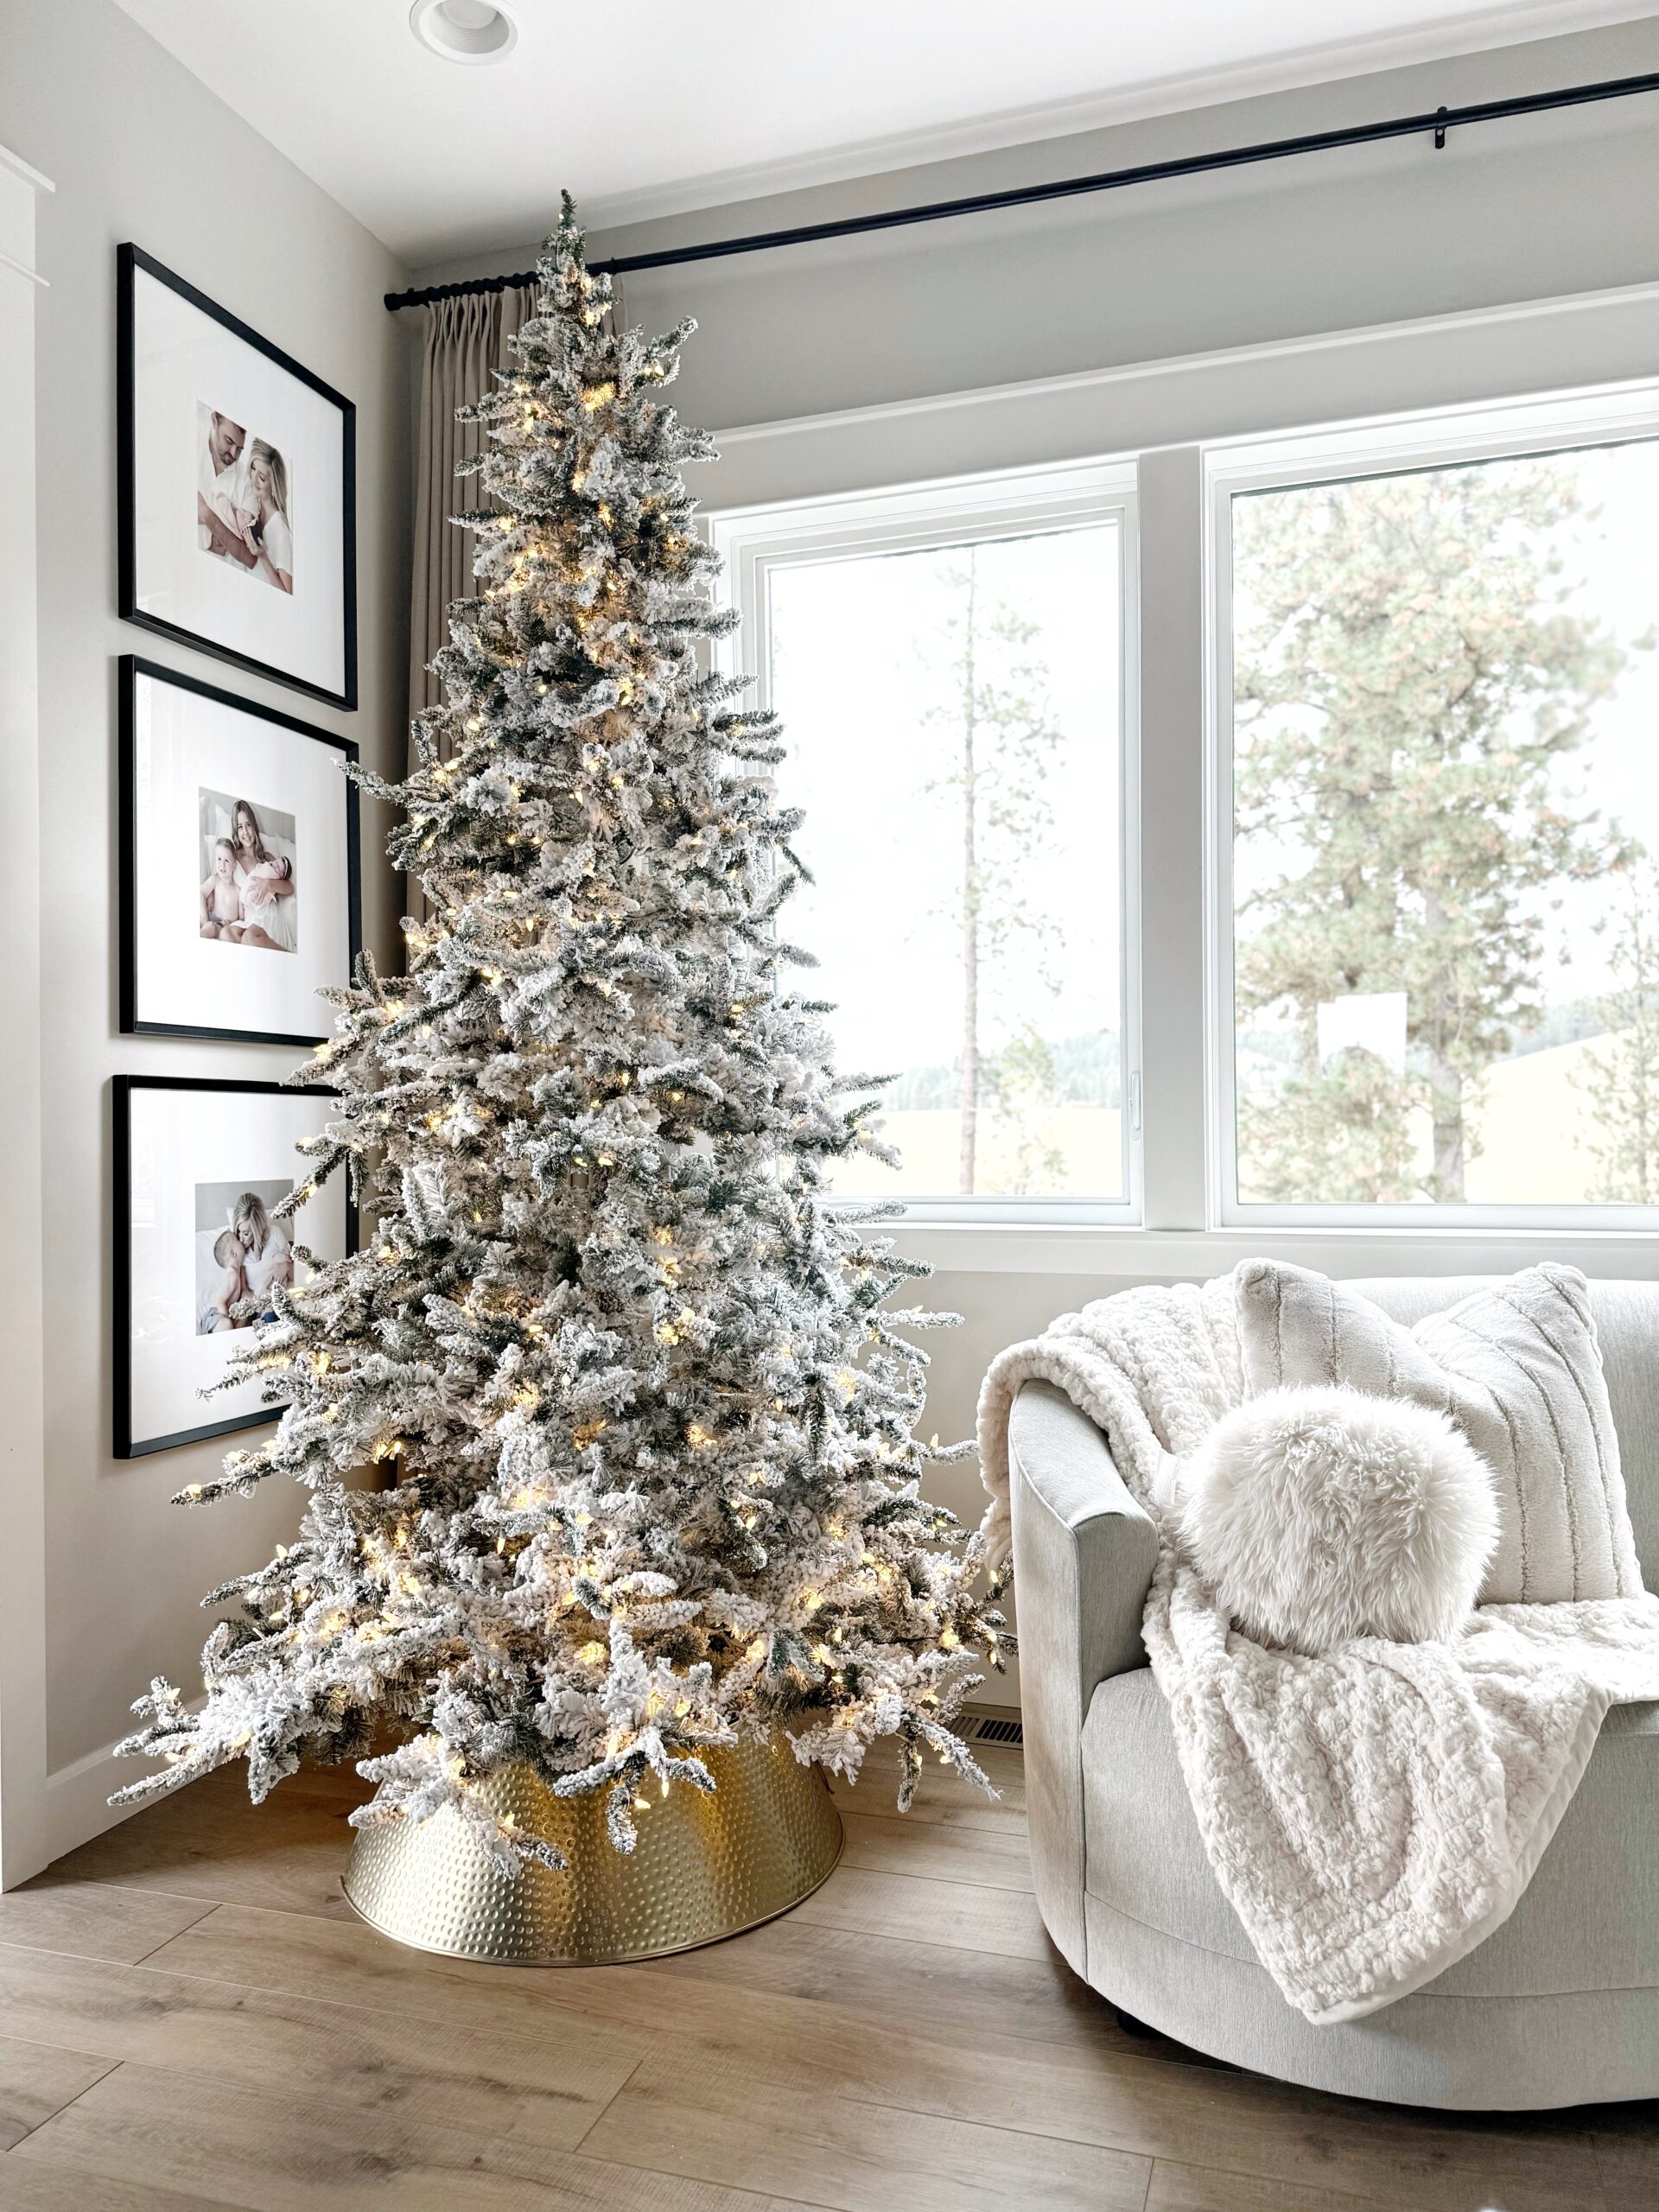 Christmas Trees in My Home | #christmas #christmastree #home #holiday #holidaydecor #seasonaldecor #home #home #homedecor #sofa #pillow #frame #fauxfur #throwpillow #blanket #nook